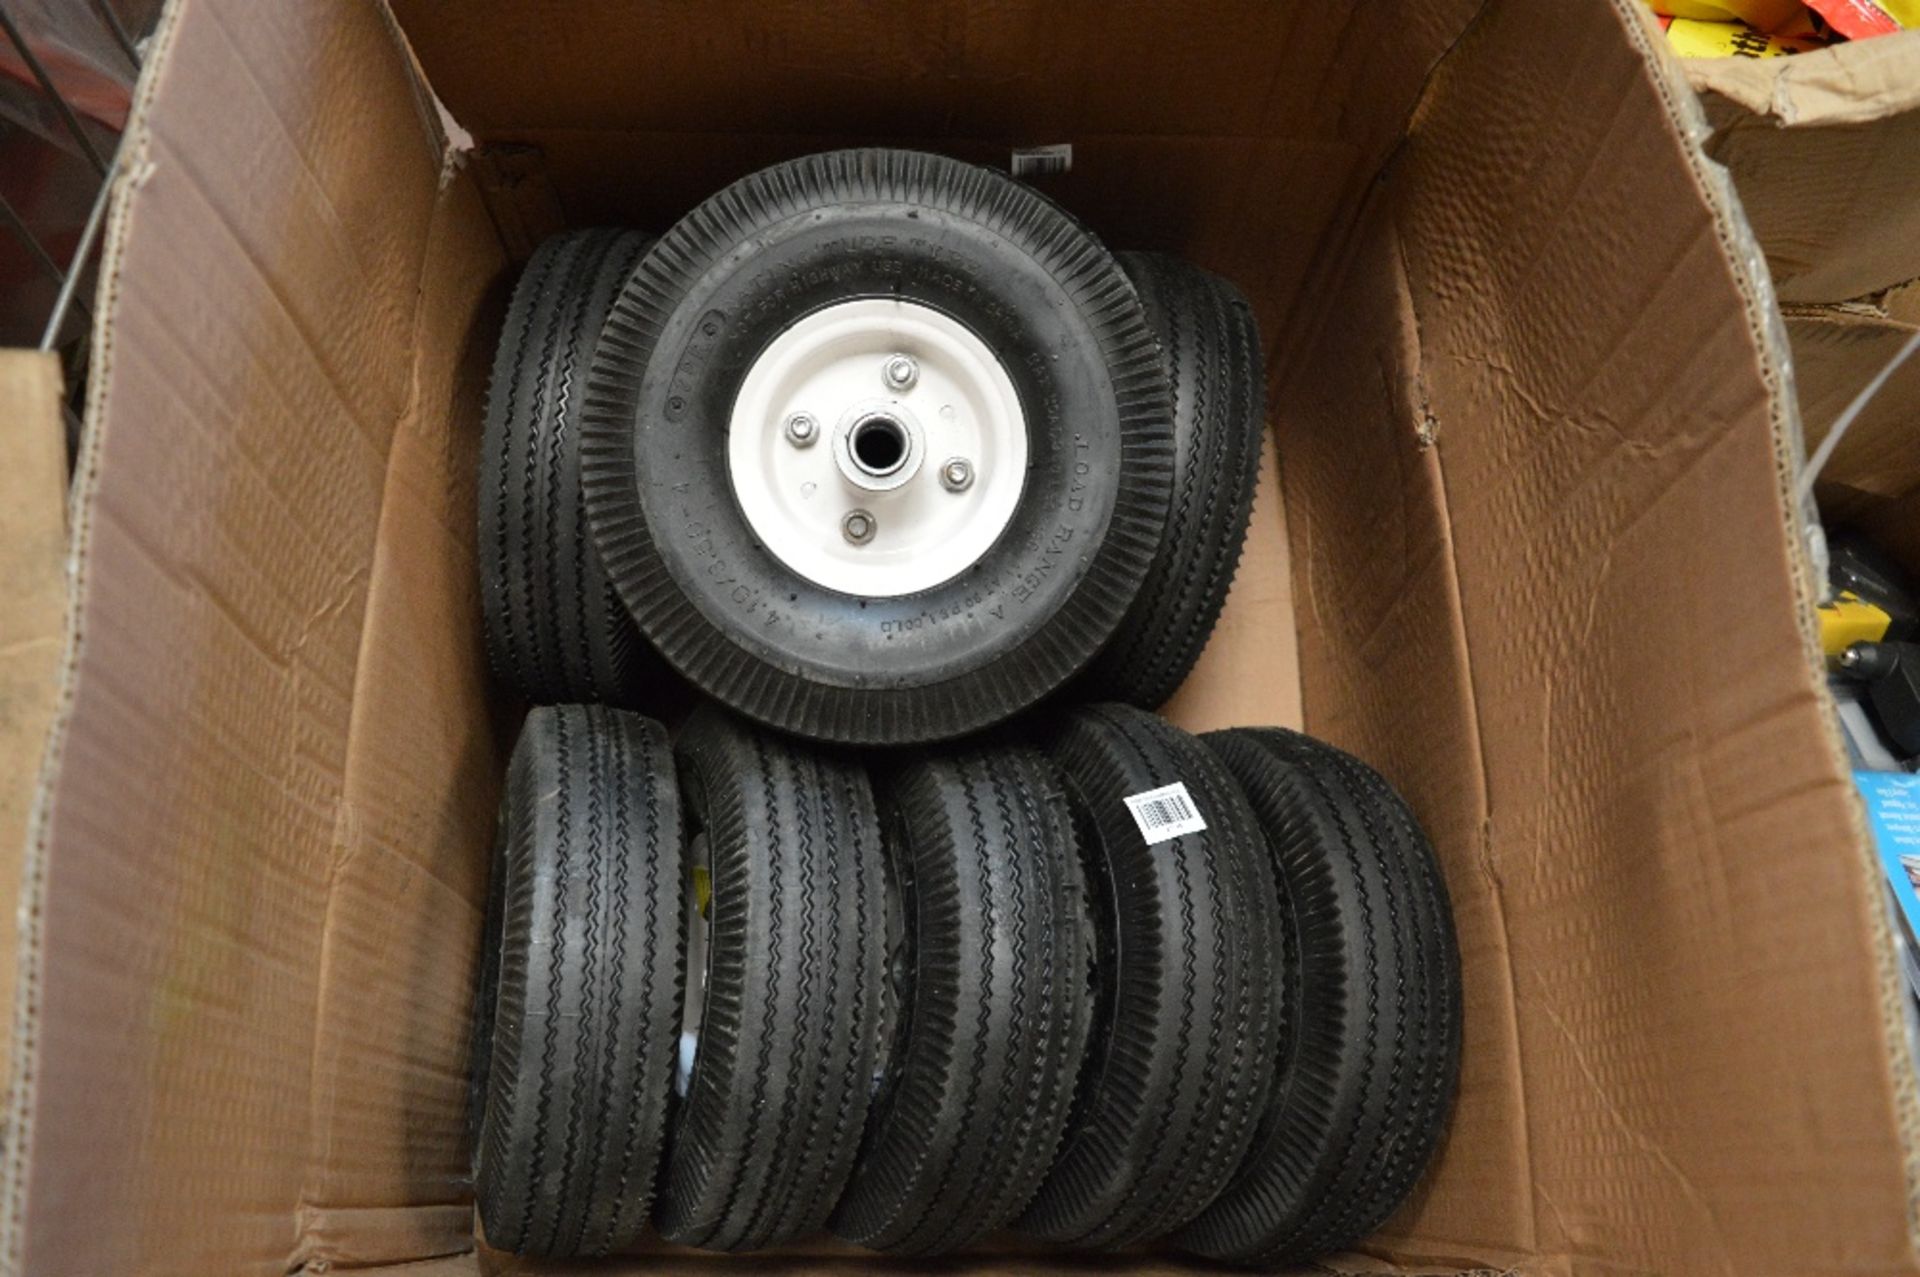 10 - 4 inch 4.10/3.50 pneumatic wheel & tyre combos
New & unused